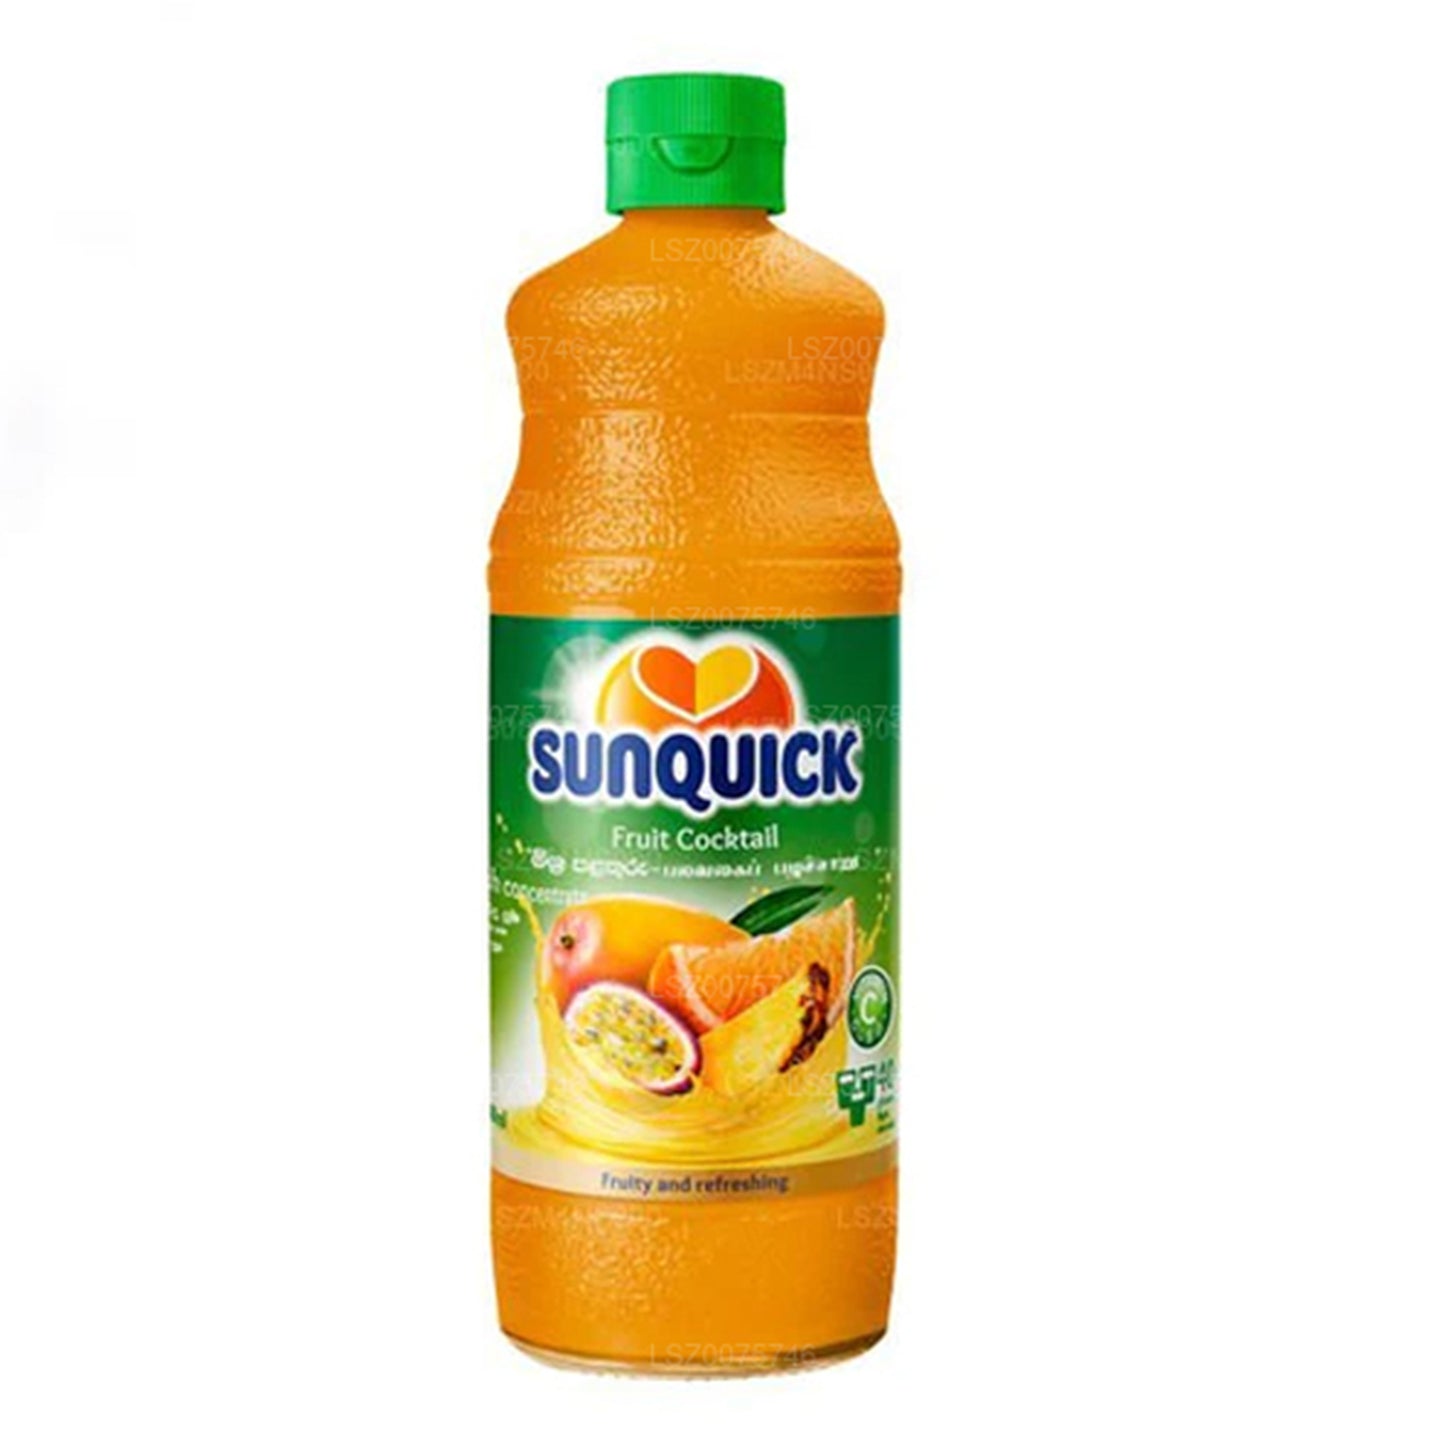 Sunquick fruitcocktail (840 ml)